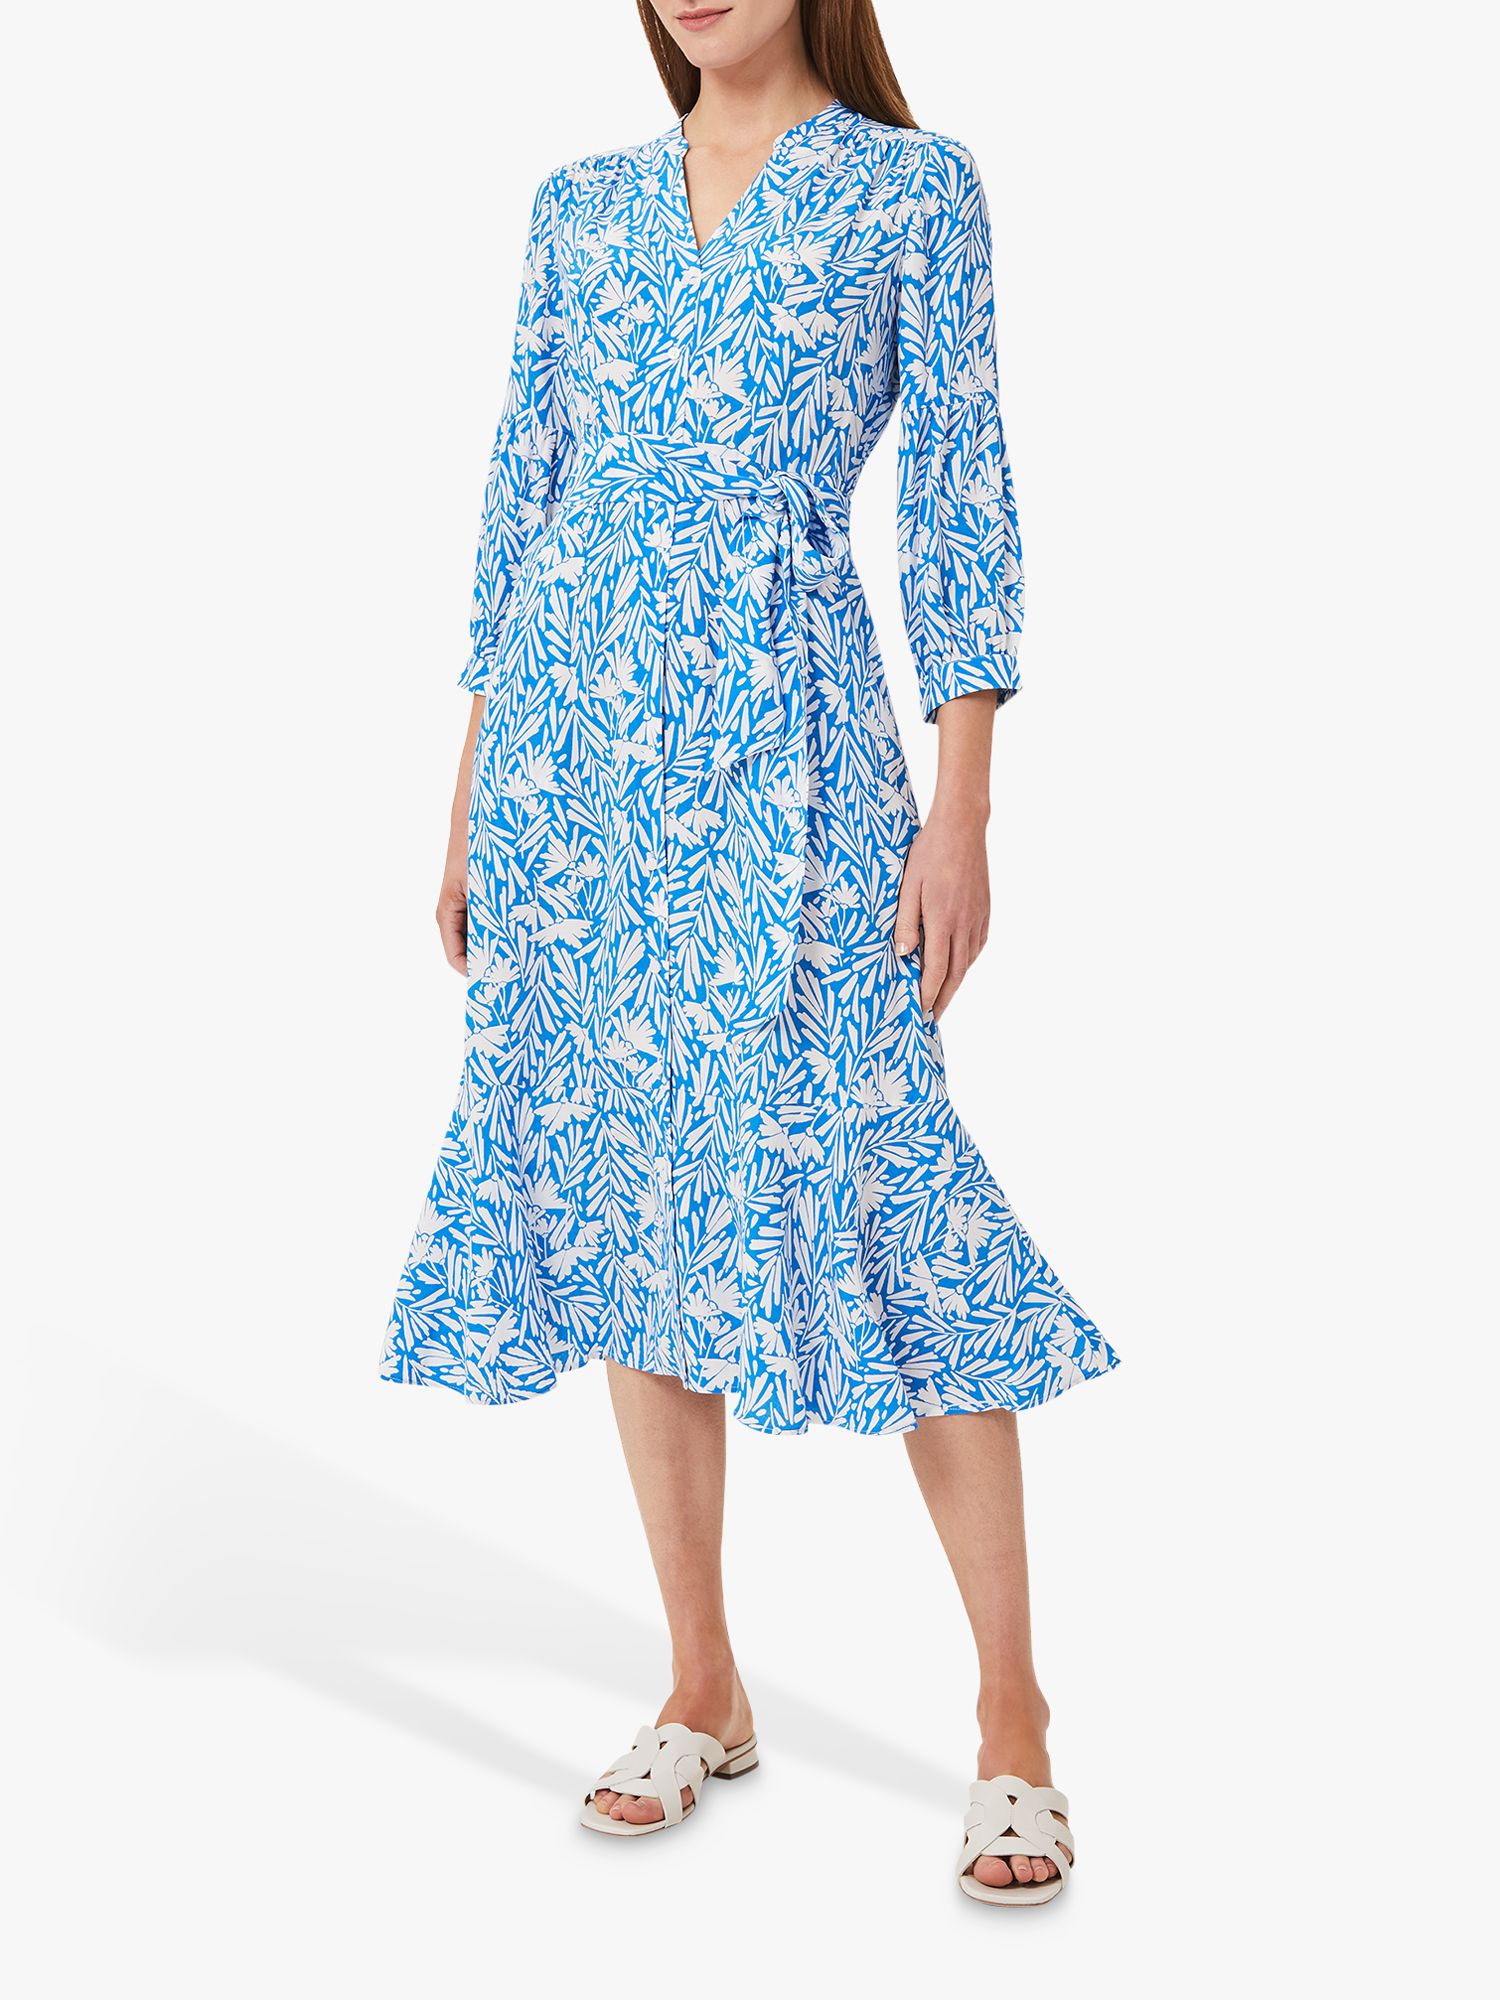 Hobbs Carla Floral Midi Dress, Azure Blue/Ivory at John Lewis & Partners